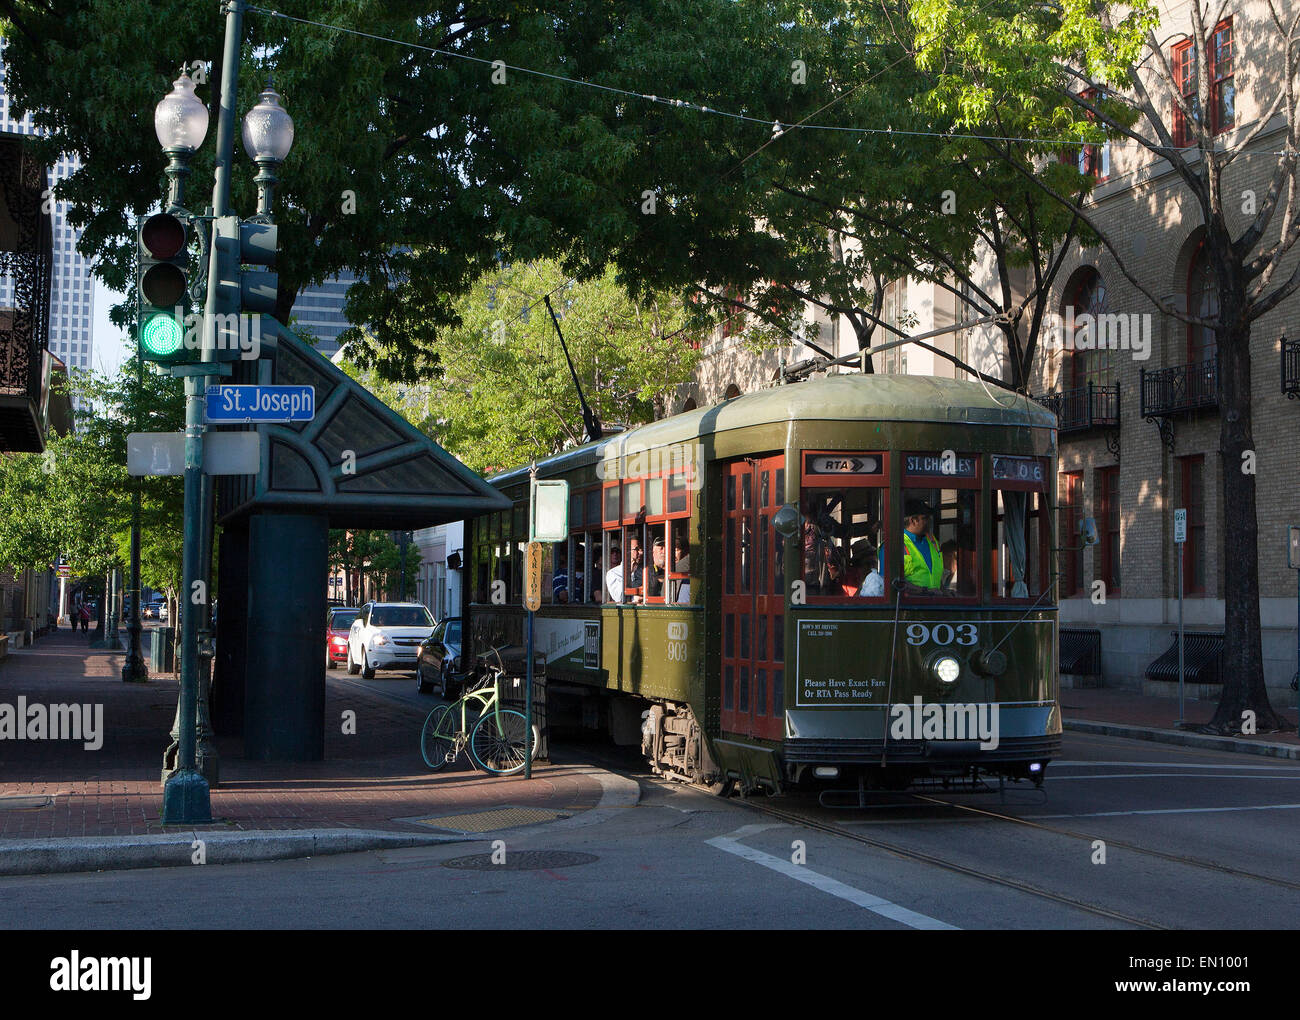 New Orleans,Louisiana: Streetcar on St Charles Avenue Stock Photo